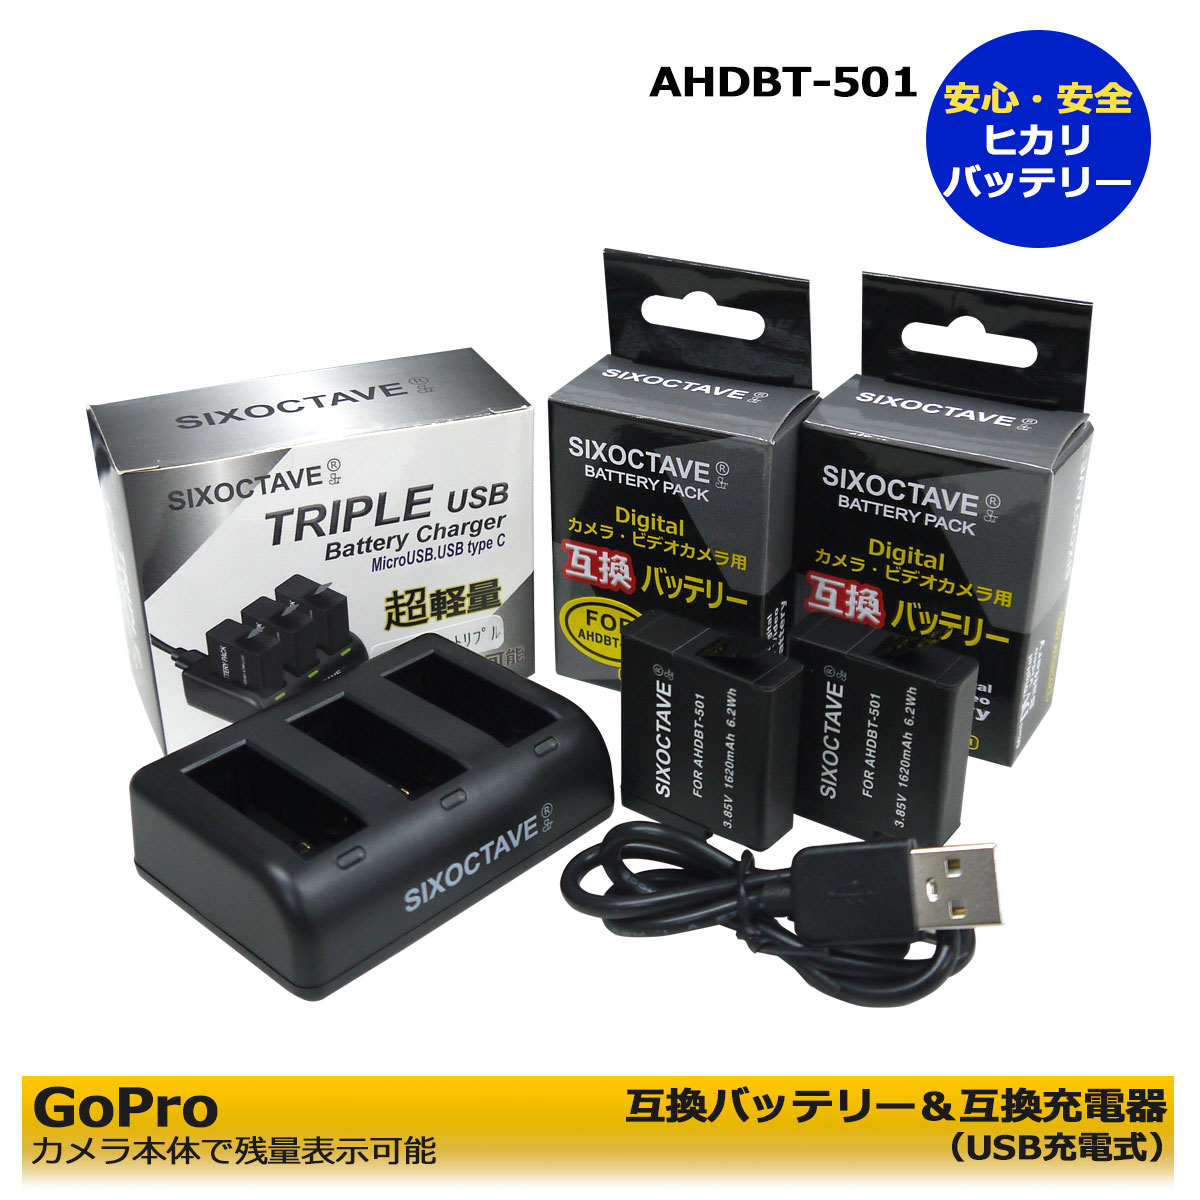 AHDBT-501 / AADBD-001-AS GoPro 互換バッテリー 2個（カメラ本体で残量表示可能）と 互換USB充電器 トリプル充電の 3点セット GoPro Hero5 / GoPro HERO5 Black / GoPro HERO5 Silver / GoPro Hero6 /GoPro HERO6 Black / GoPro HERO7